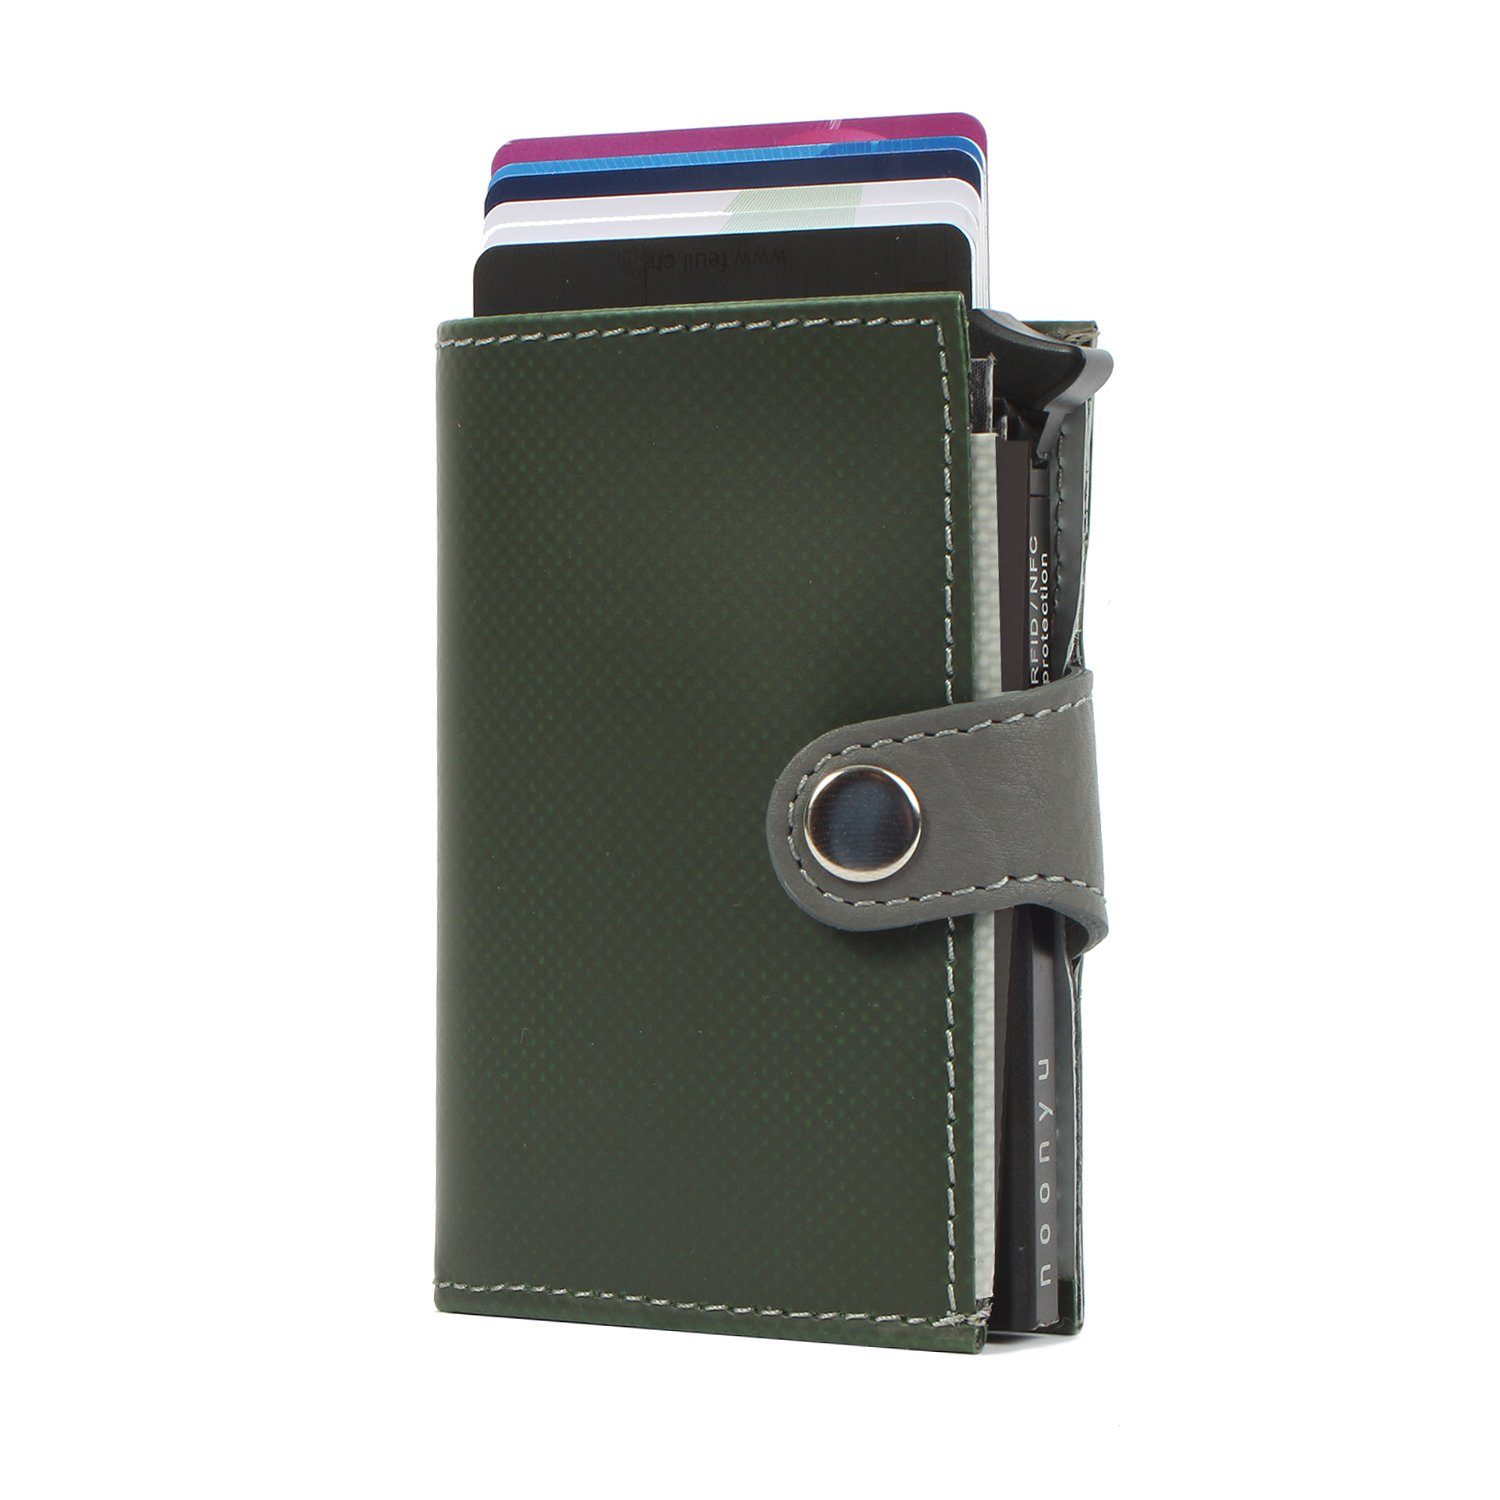 7clouds Mini Geldbörse noonyu single tarpaulin, Kreditkartenbörse aus Upcycling Tarpaulin junglegreen